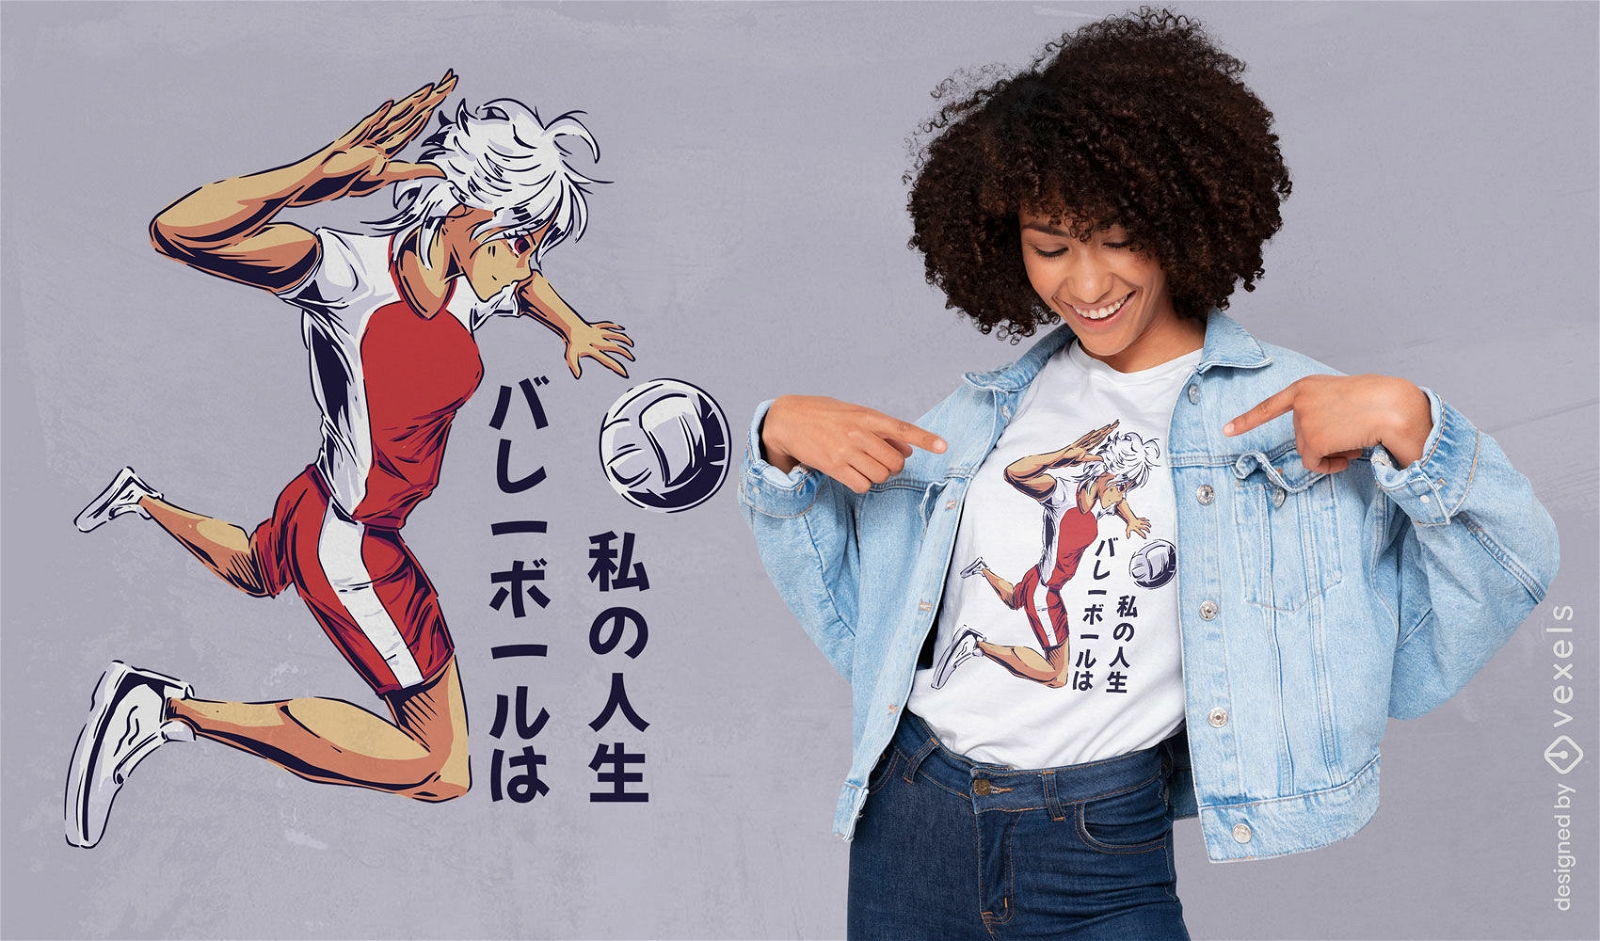 Chica anime jugando diseño de camiseta de voleibol.